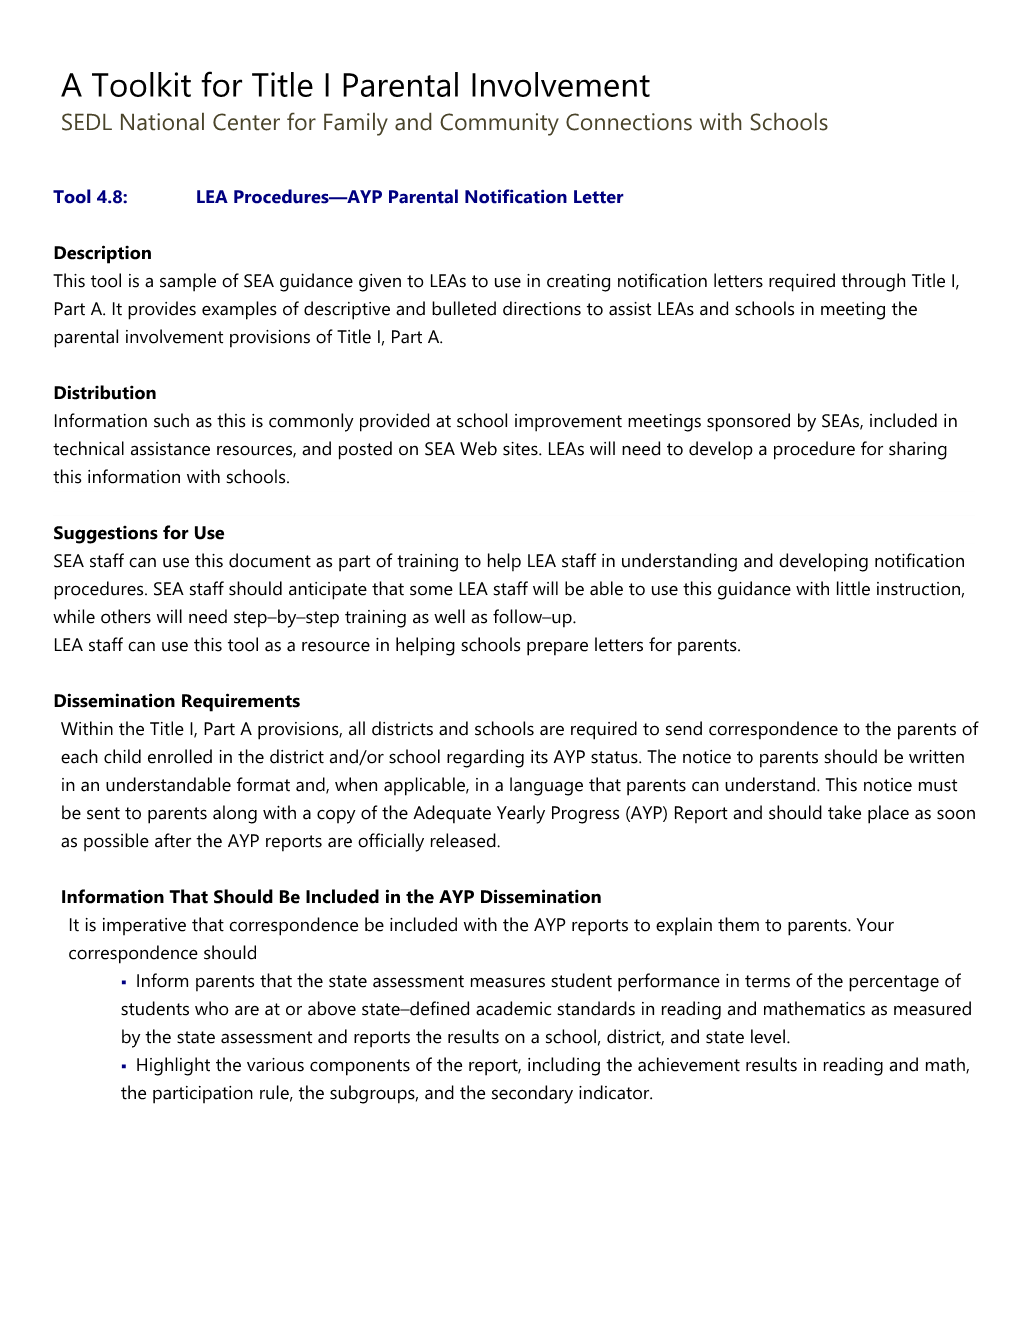 Tool 4.8:LEA Procedures AYP Parental Notification Letter